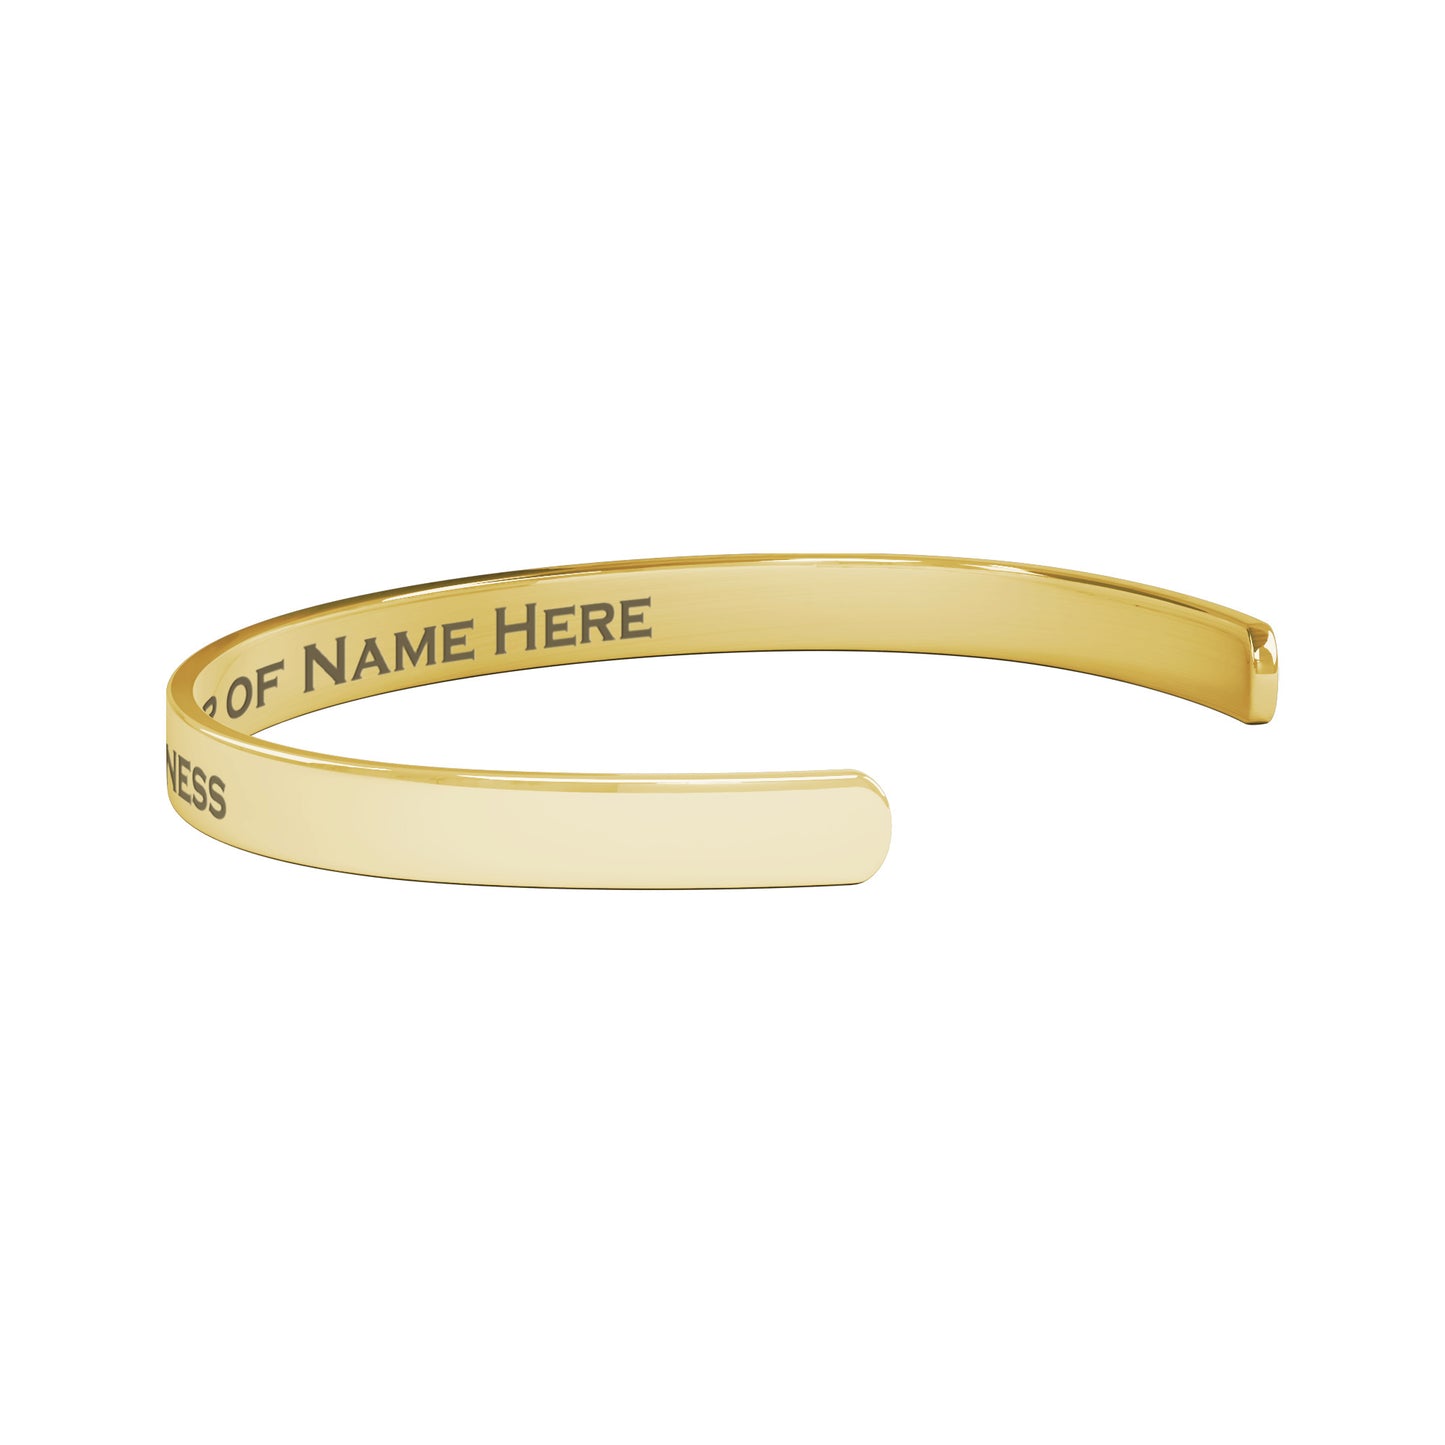 Personalized Bone Cancer Awareness Cuff Bracelet